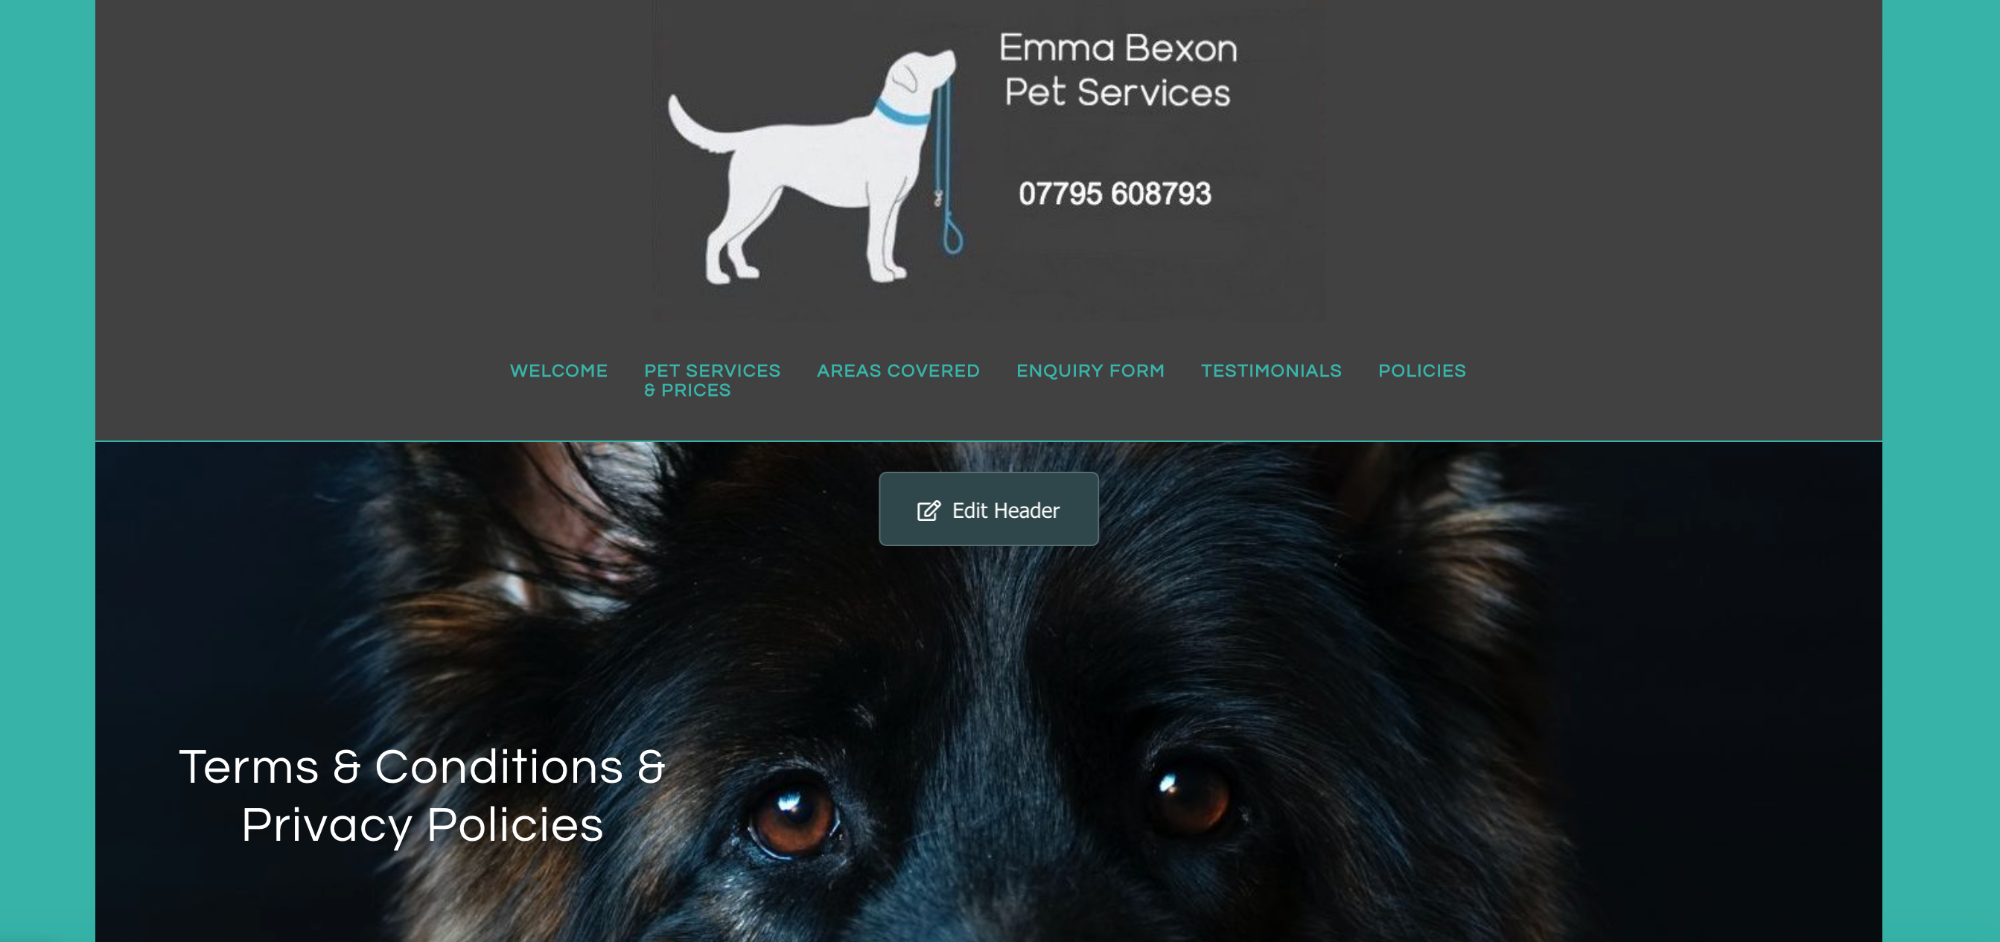 Emma Bexon Pet Services